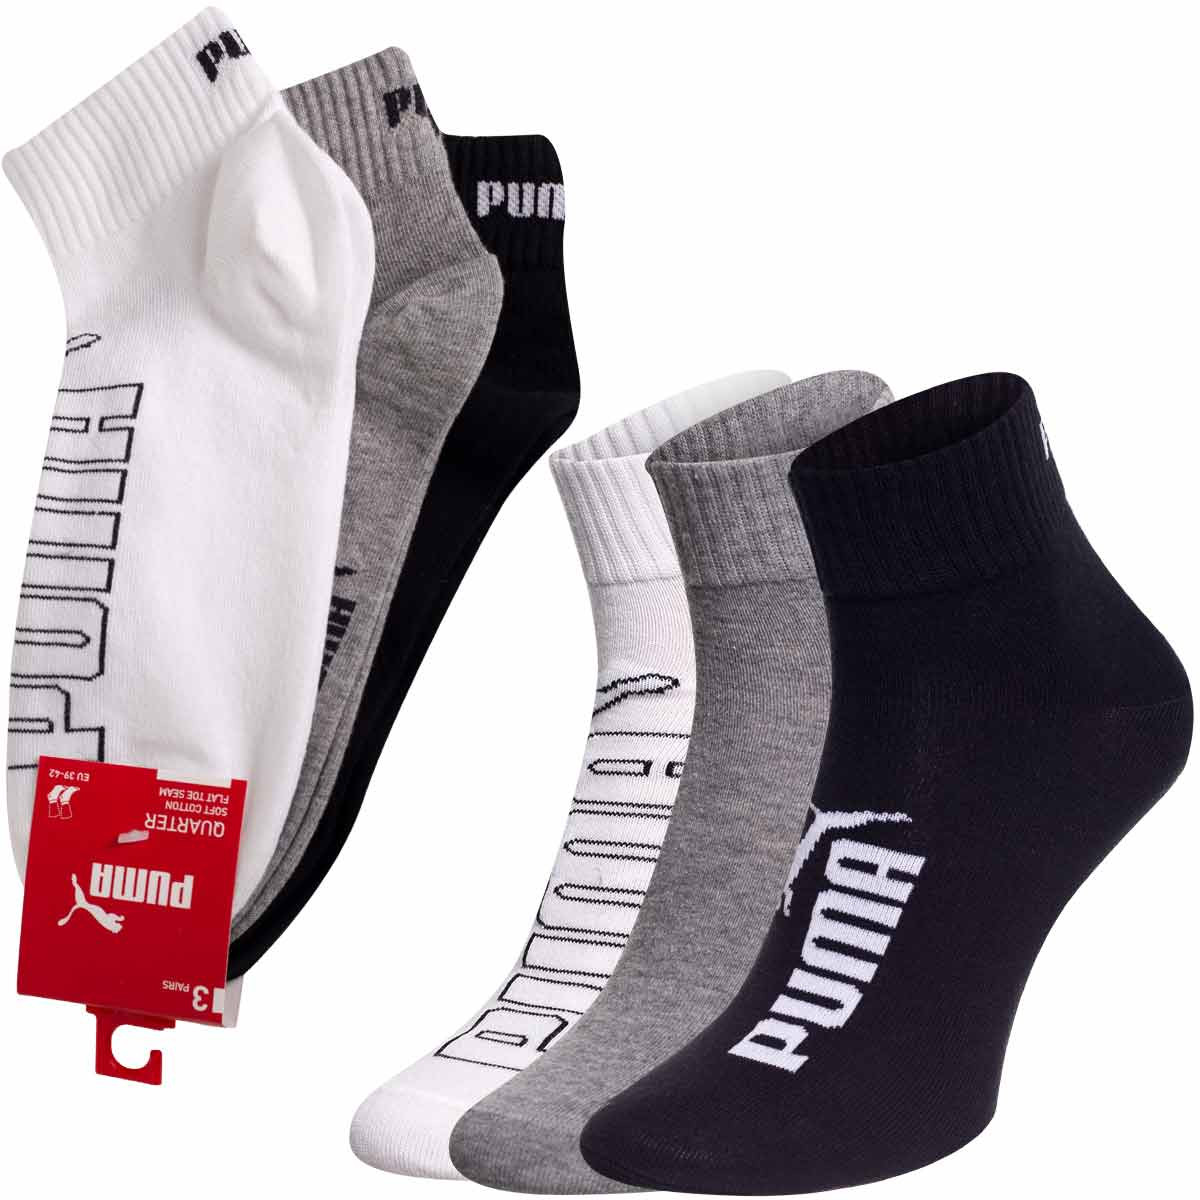 Puma 3Pack Socks 90798901 Grey/Black/White 43-46